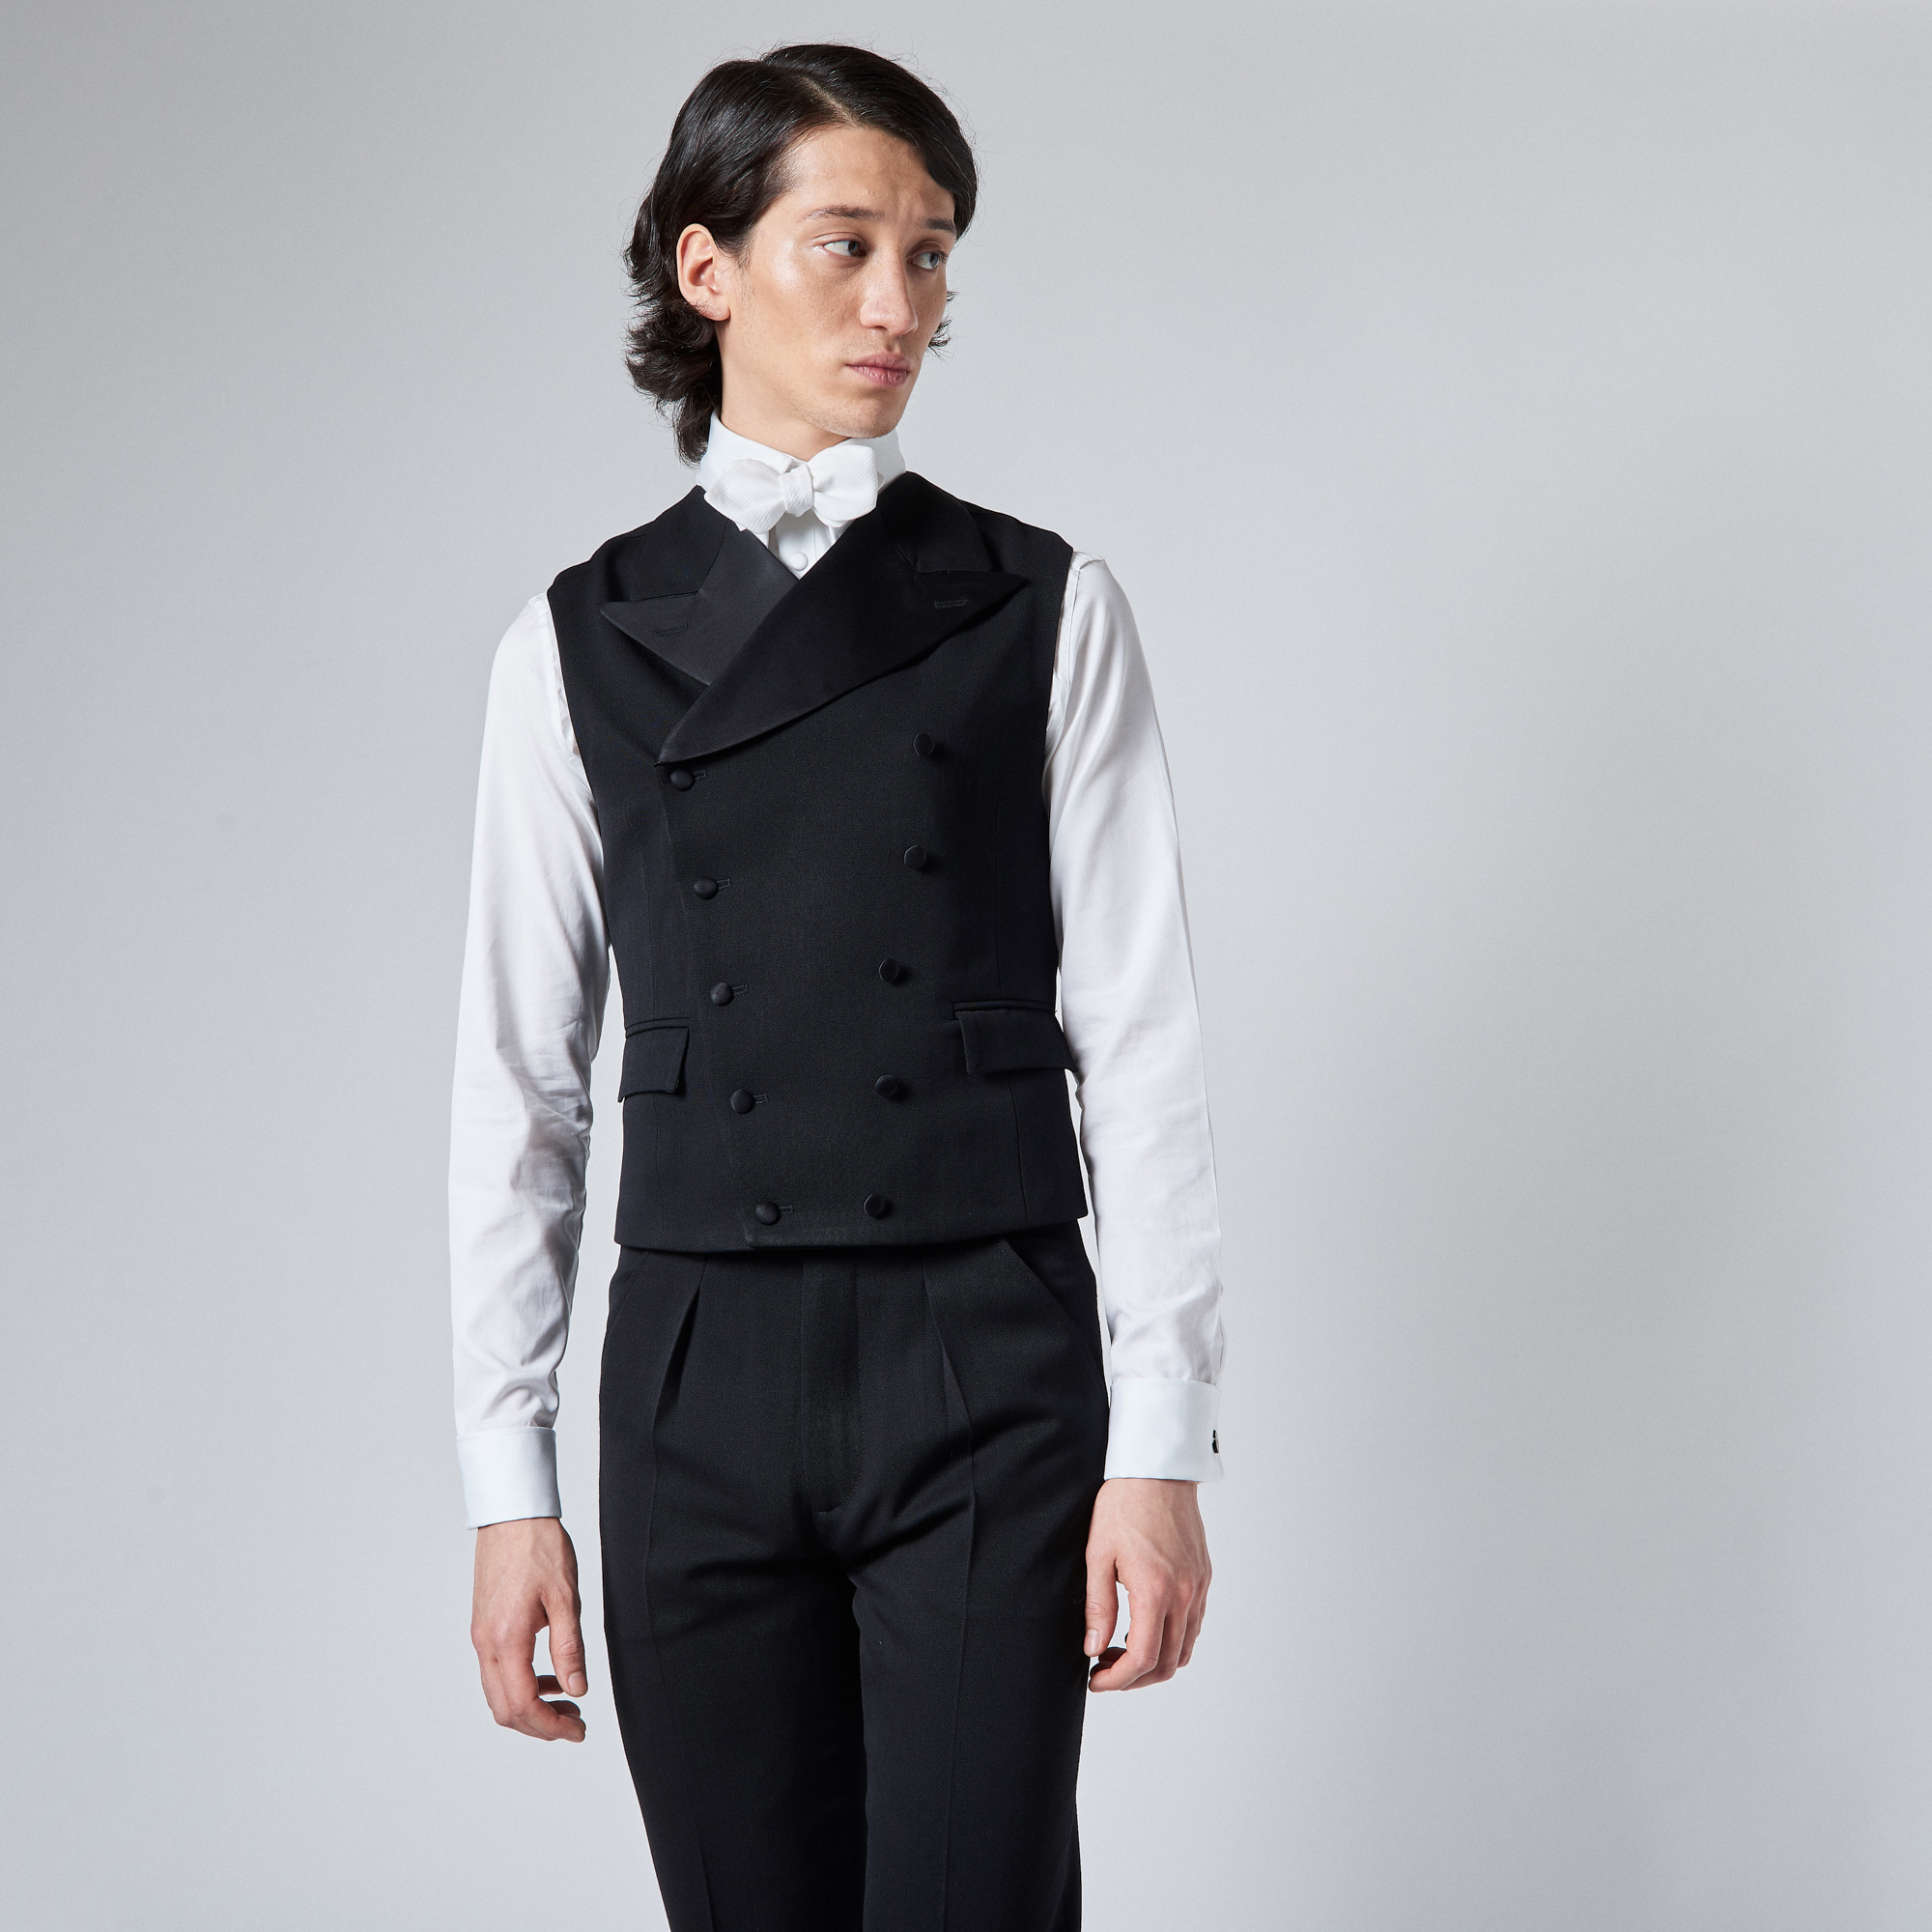 THE BEAU' BLACK BARATHEA DRESS WAISTCOAT — Joshua Kanemenswear